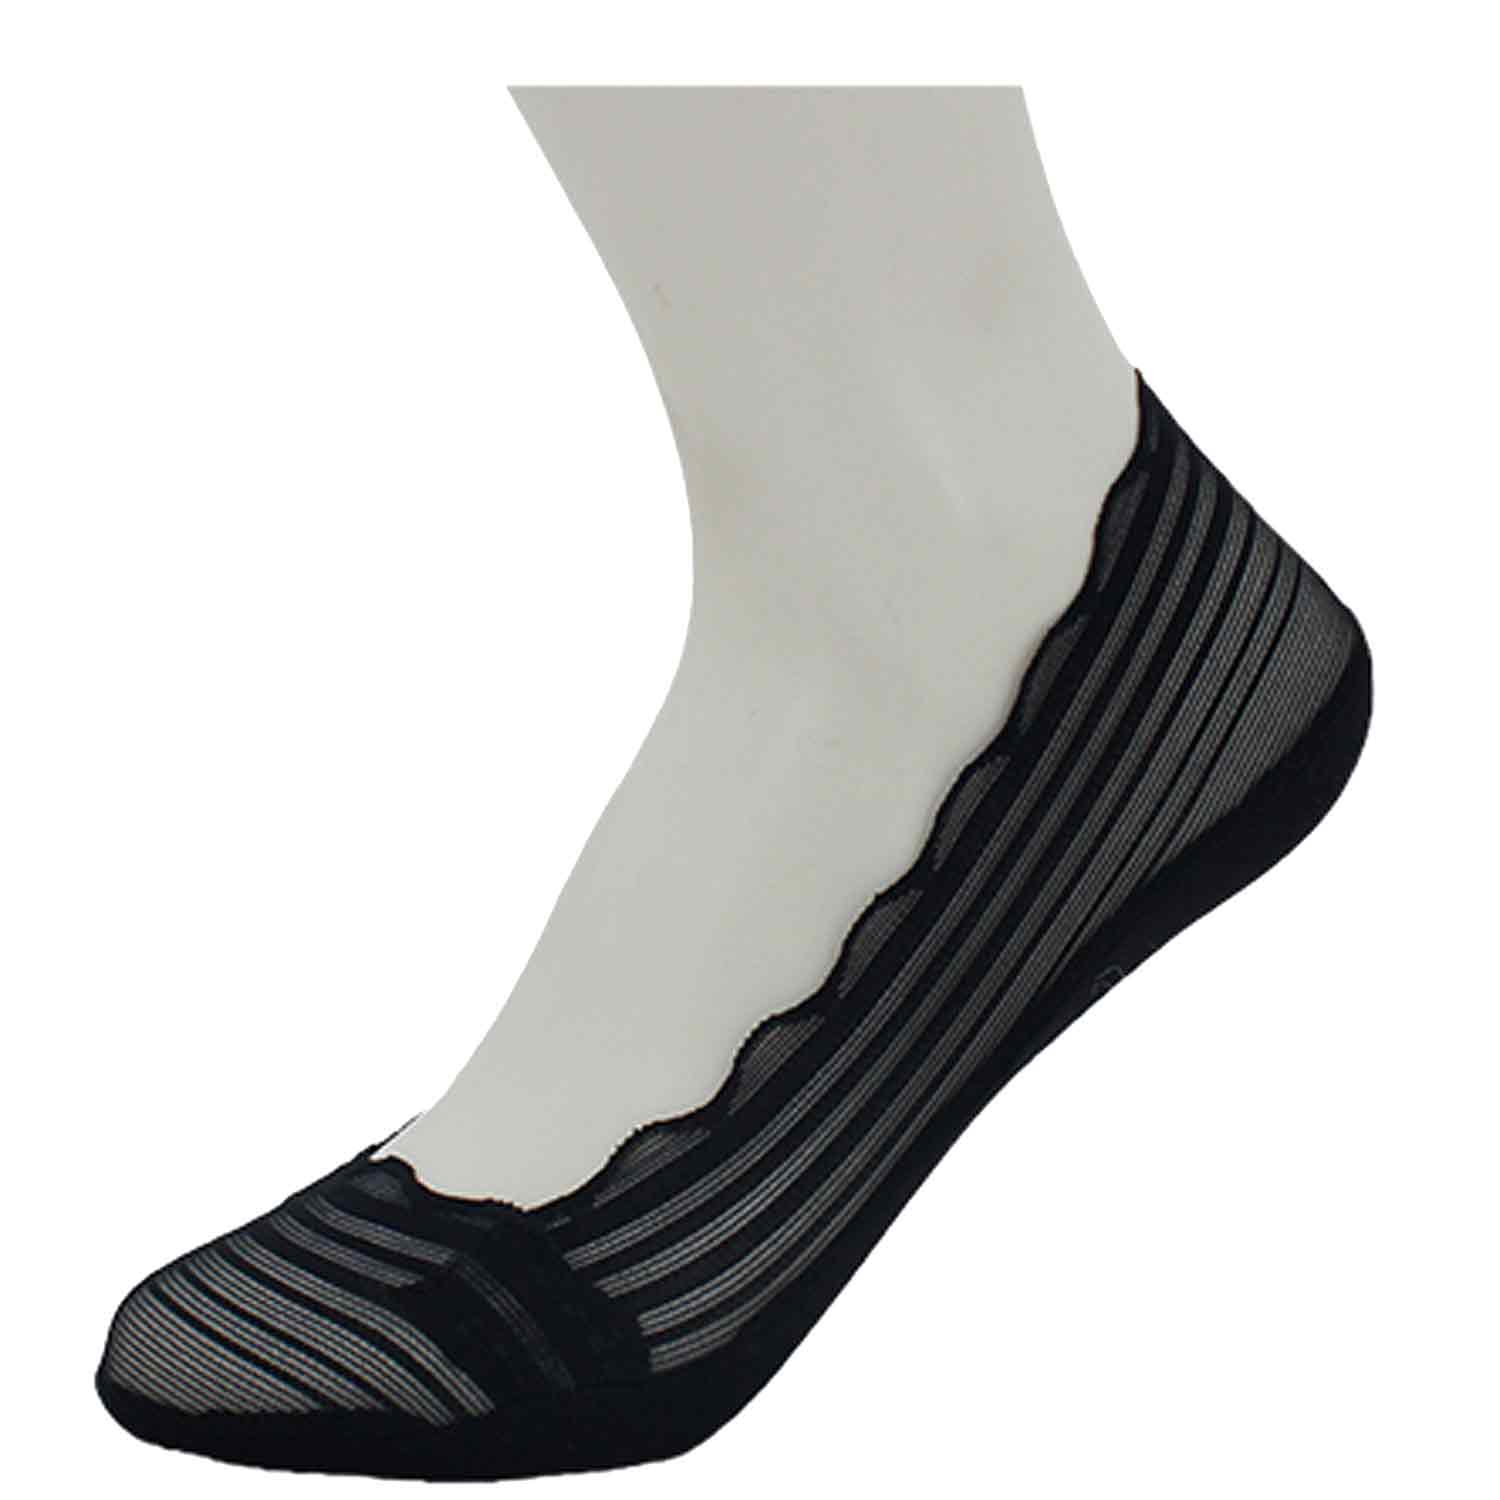 The Skandinavian Brand 5er Pack Ballerina Socken mit Spitze Gr. 36-41 schwarz